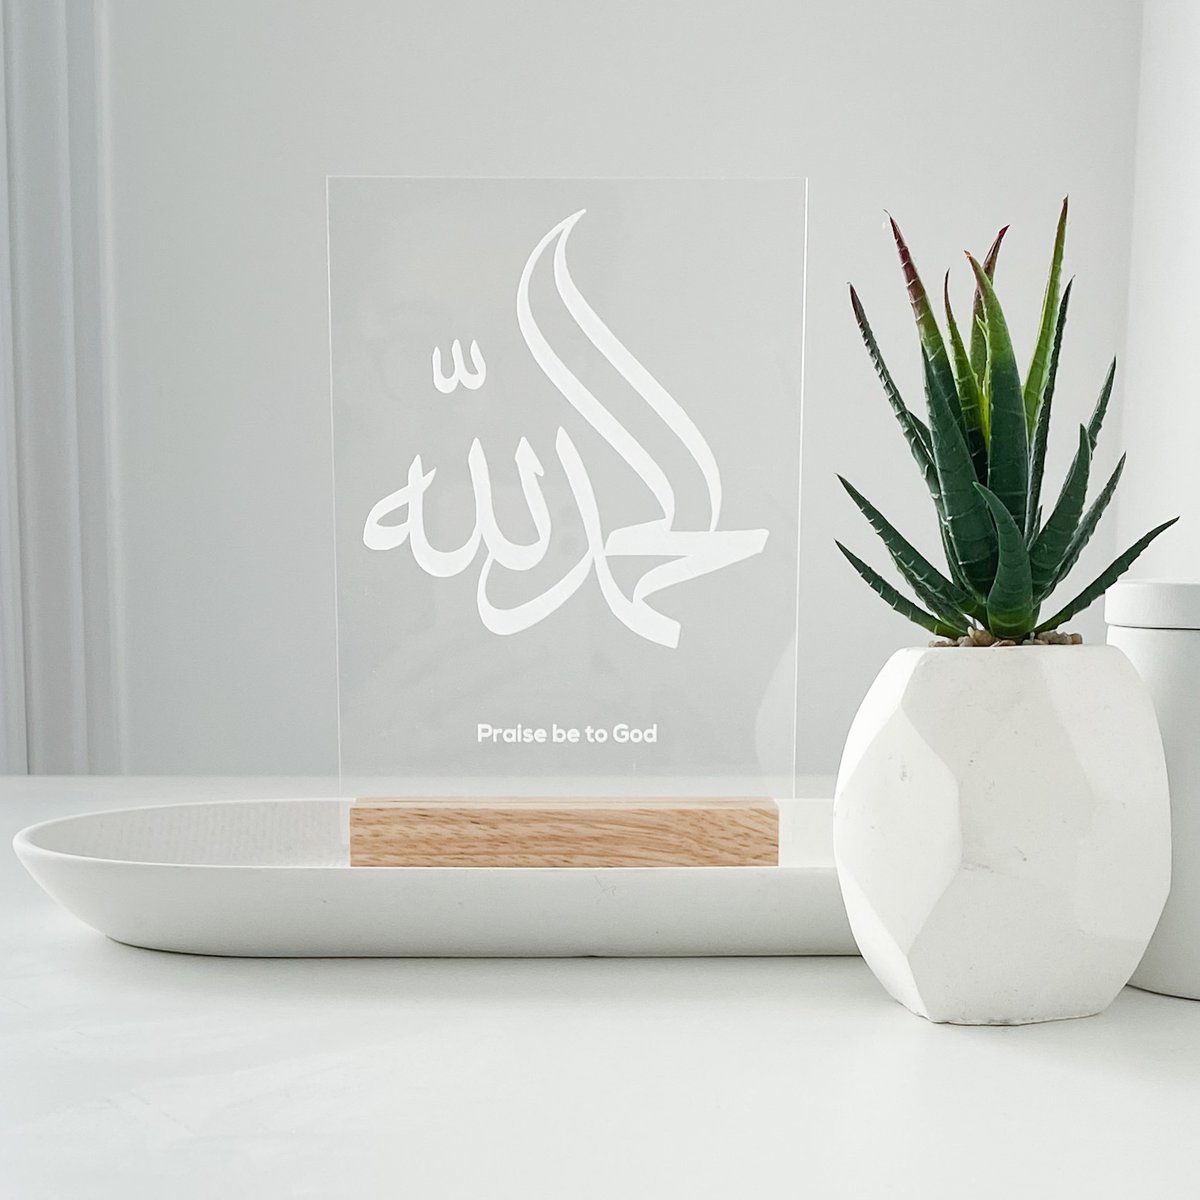 Image of acrylic alhamdulillah 